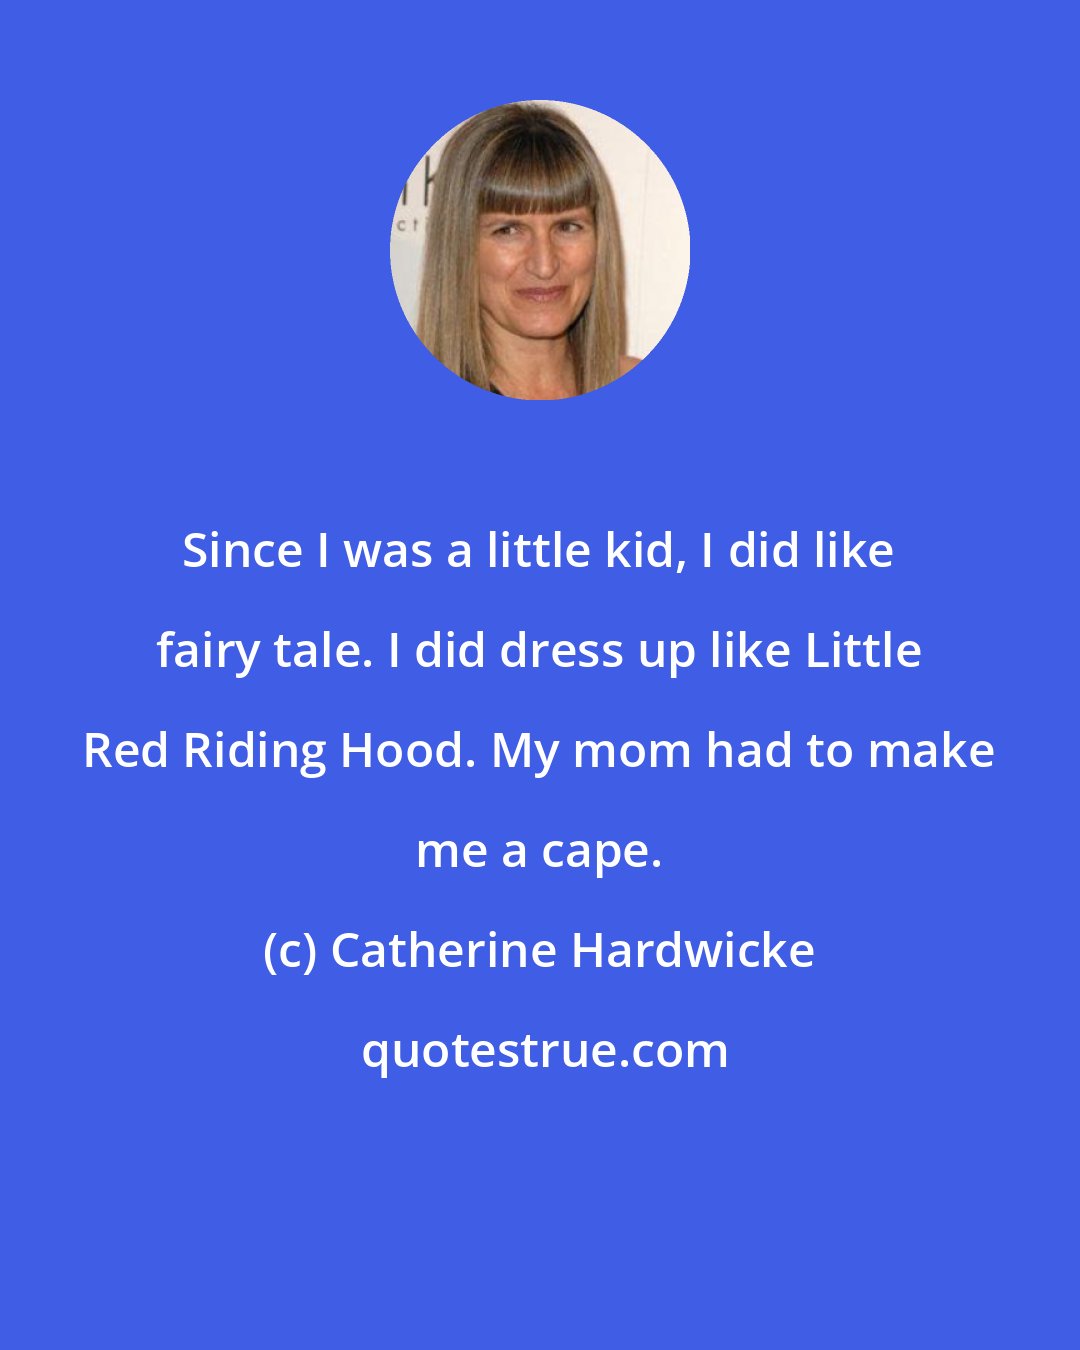 Catherine Hardwicke: Since I was a little kid, I did like fairy tale. I did dress up like Little Red Riding Hood. My mom had to make me a cape.